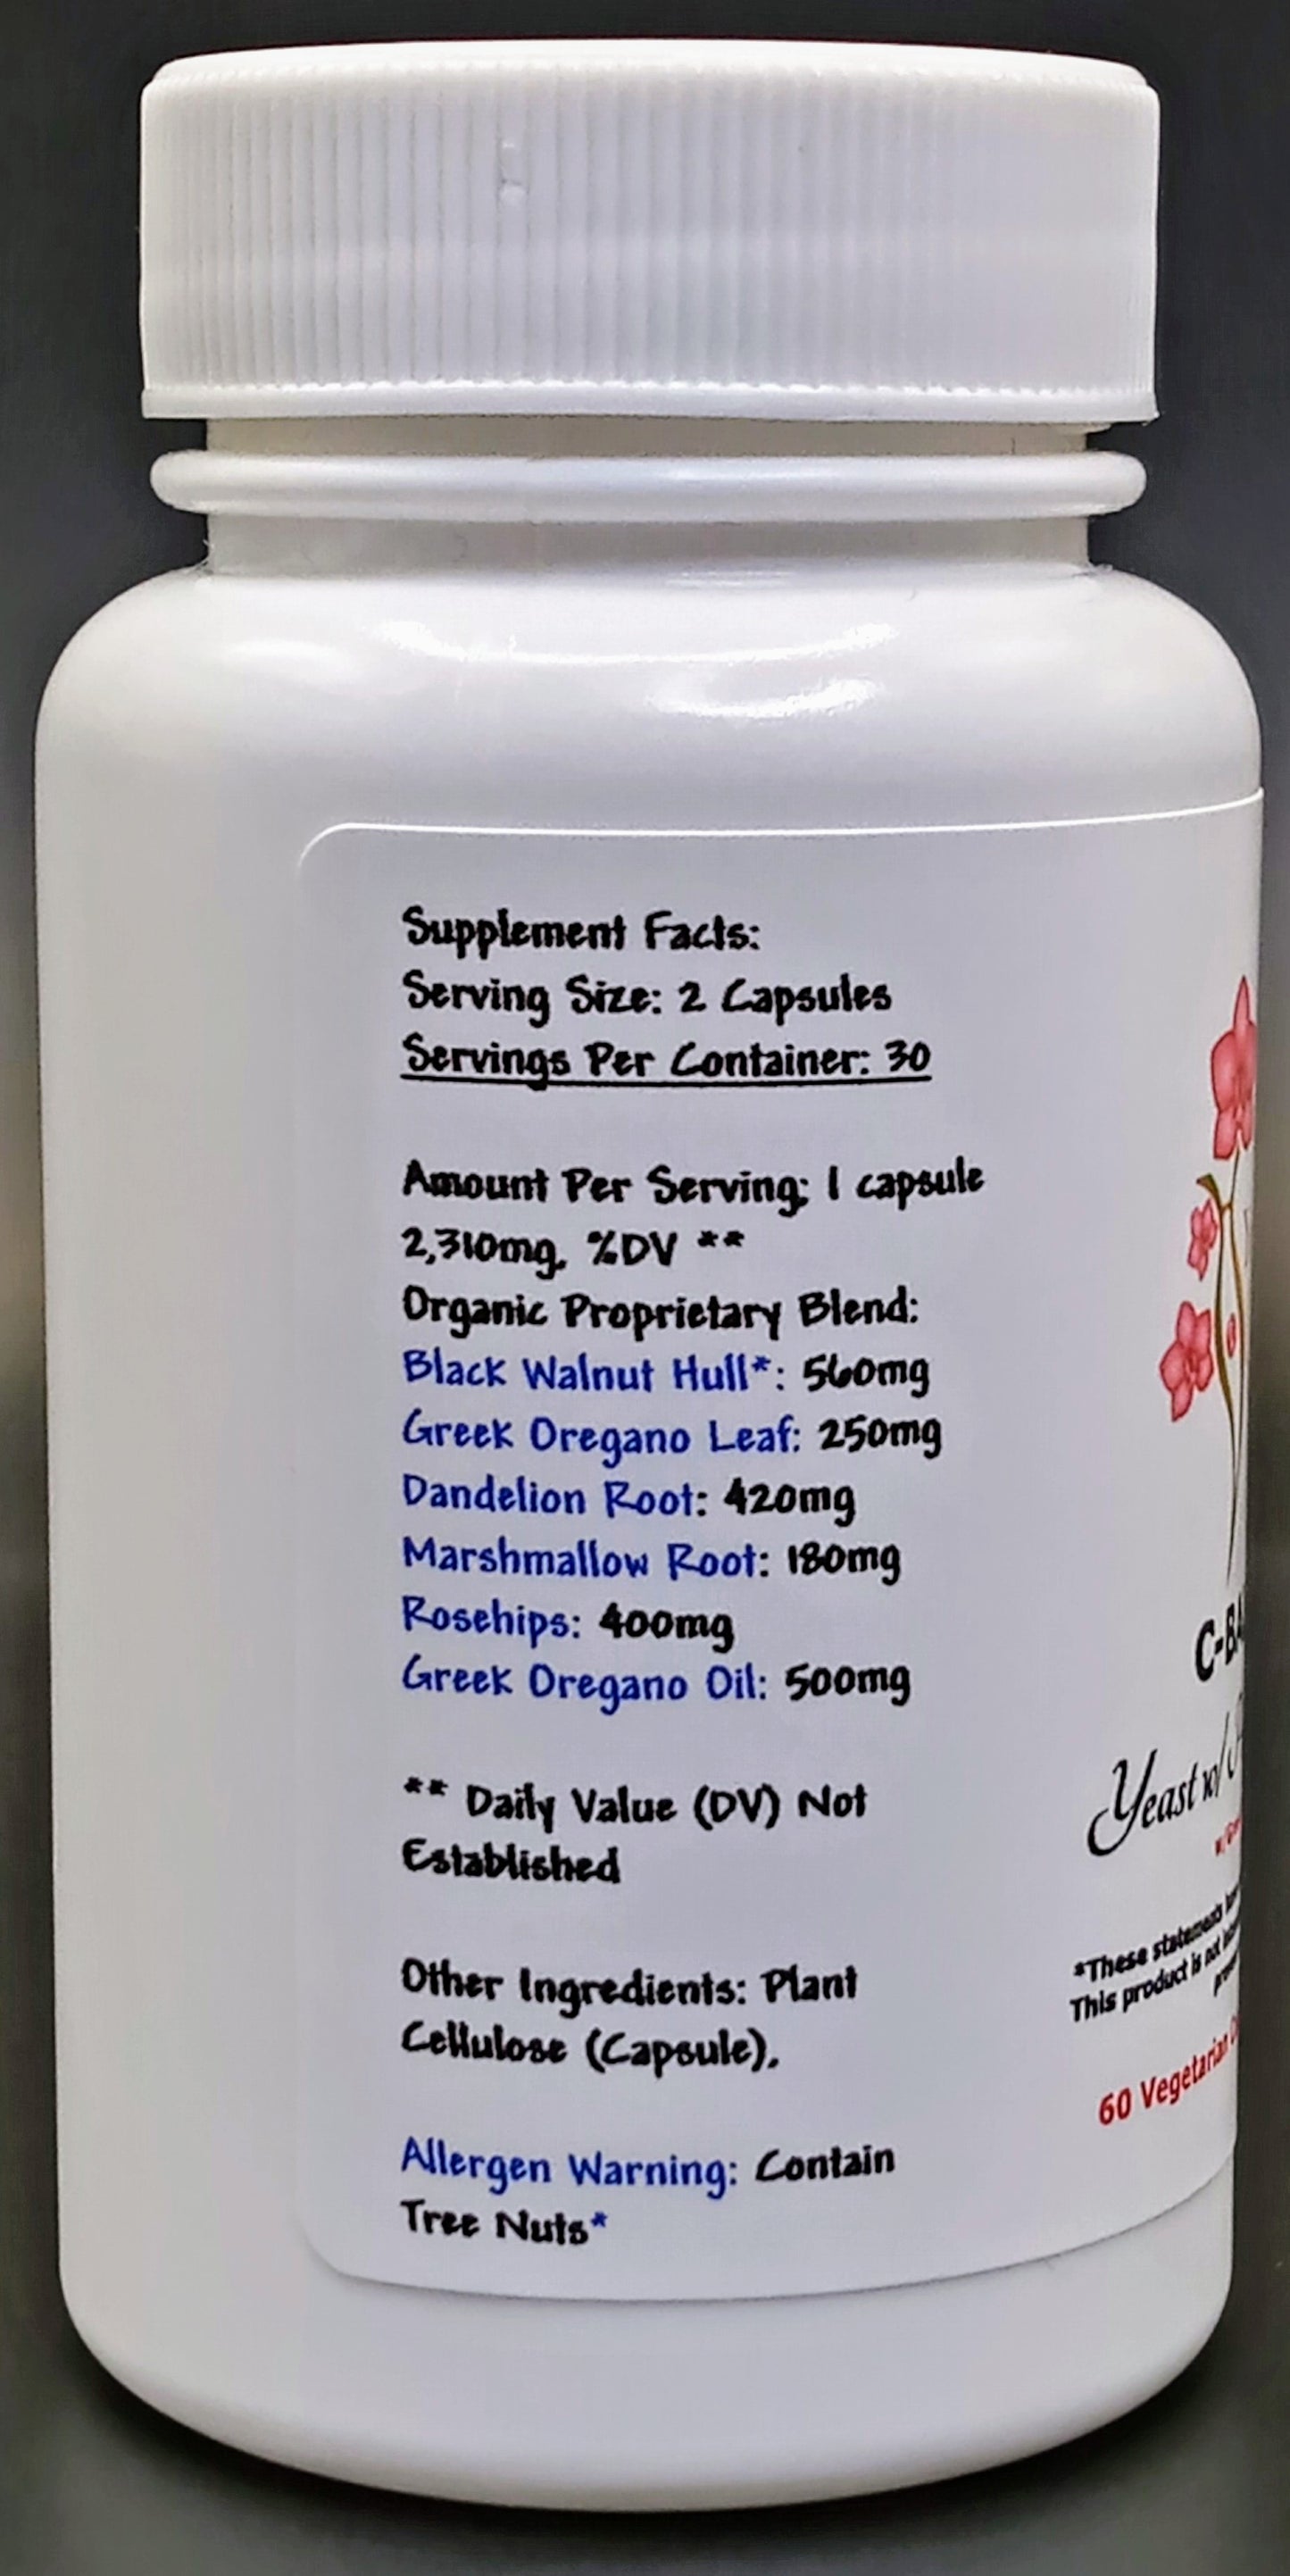 C-BALANCE: Organic Herbal Yeast w/ Prebiotic Support,  60 V-Caps- 2,310mg